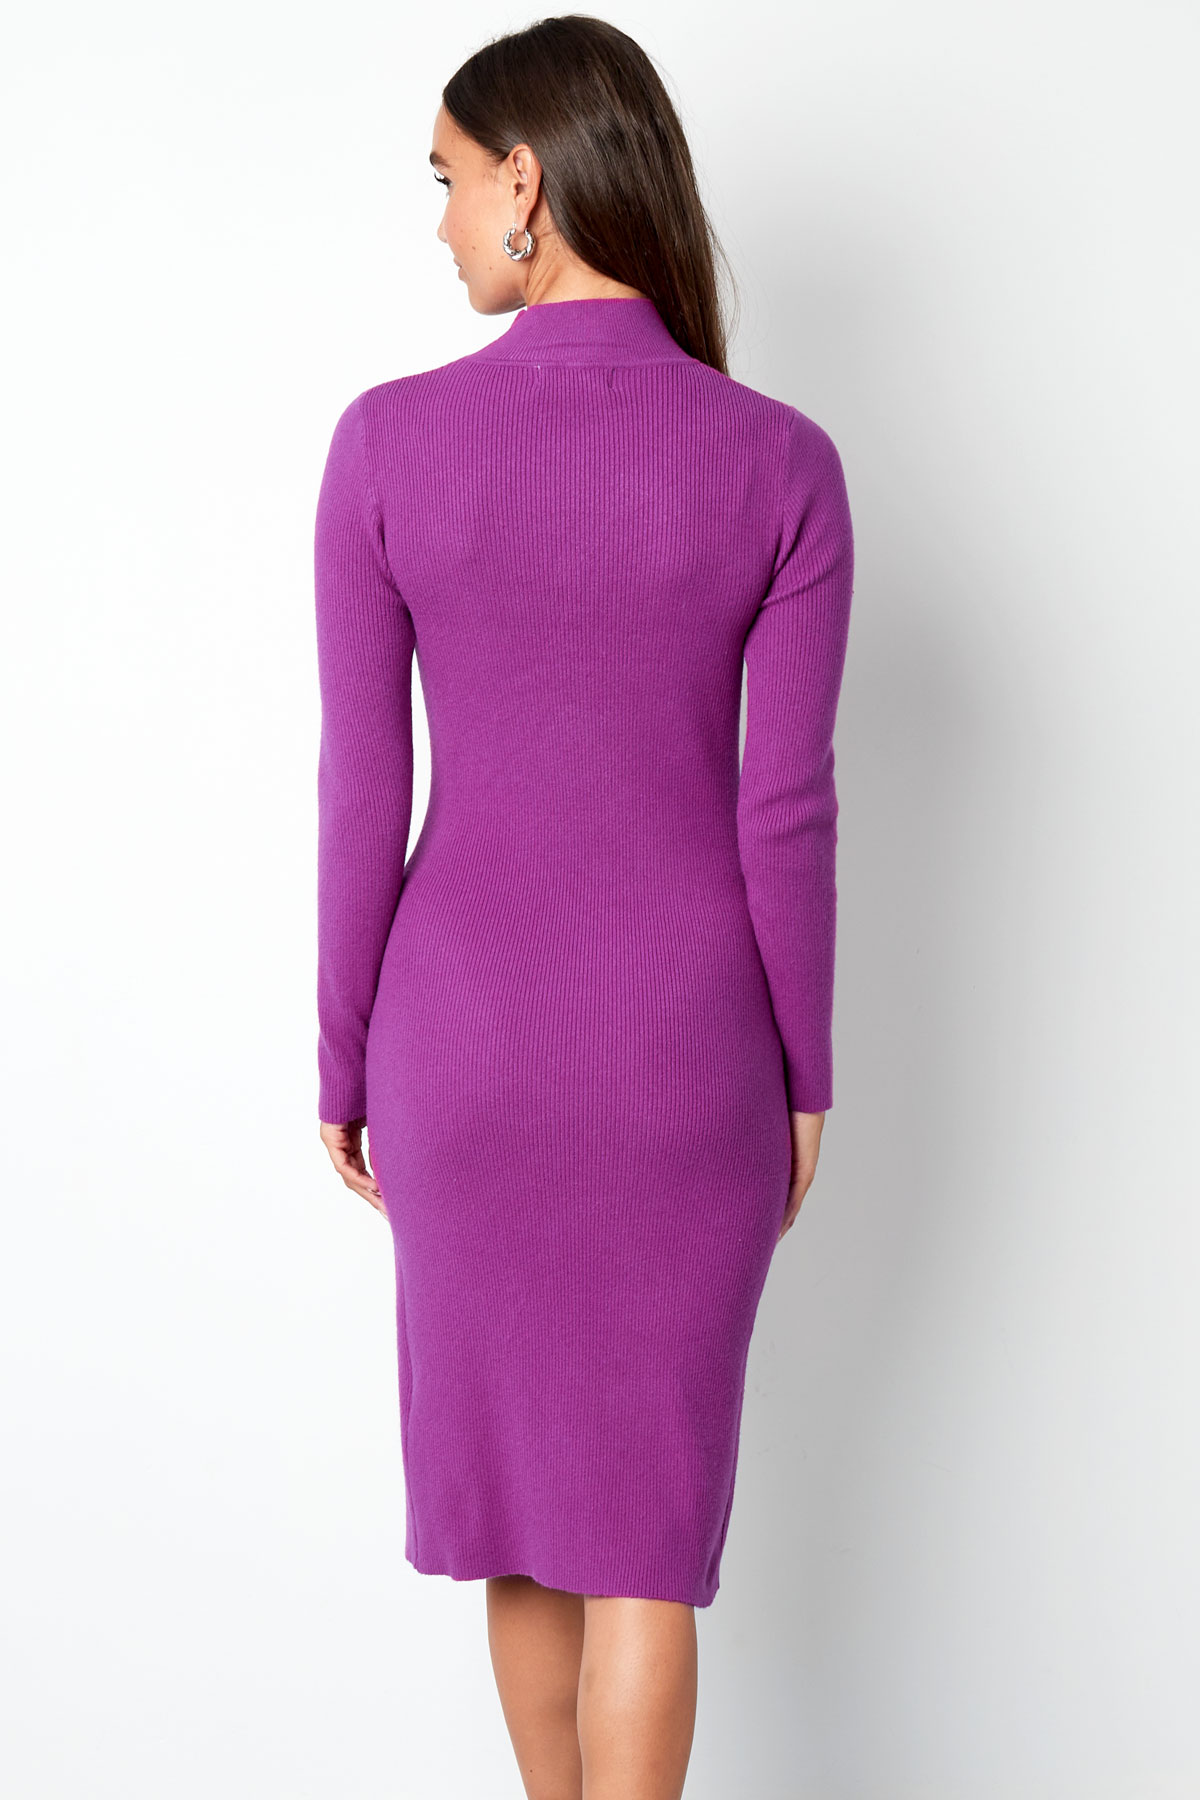 Midi dress with slit - purple h5 Picture12